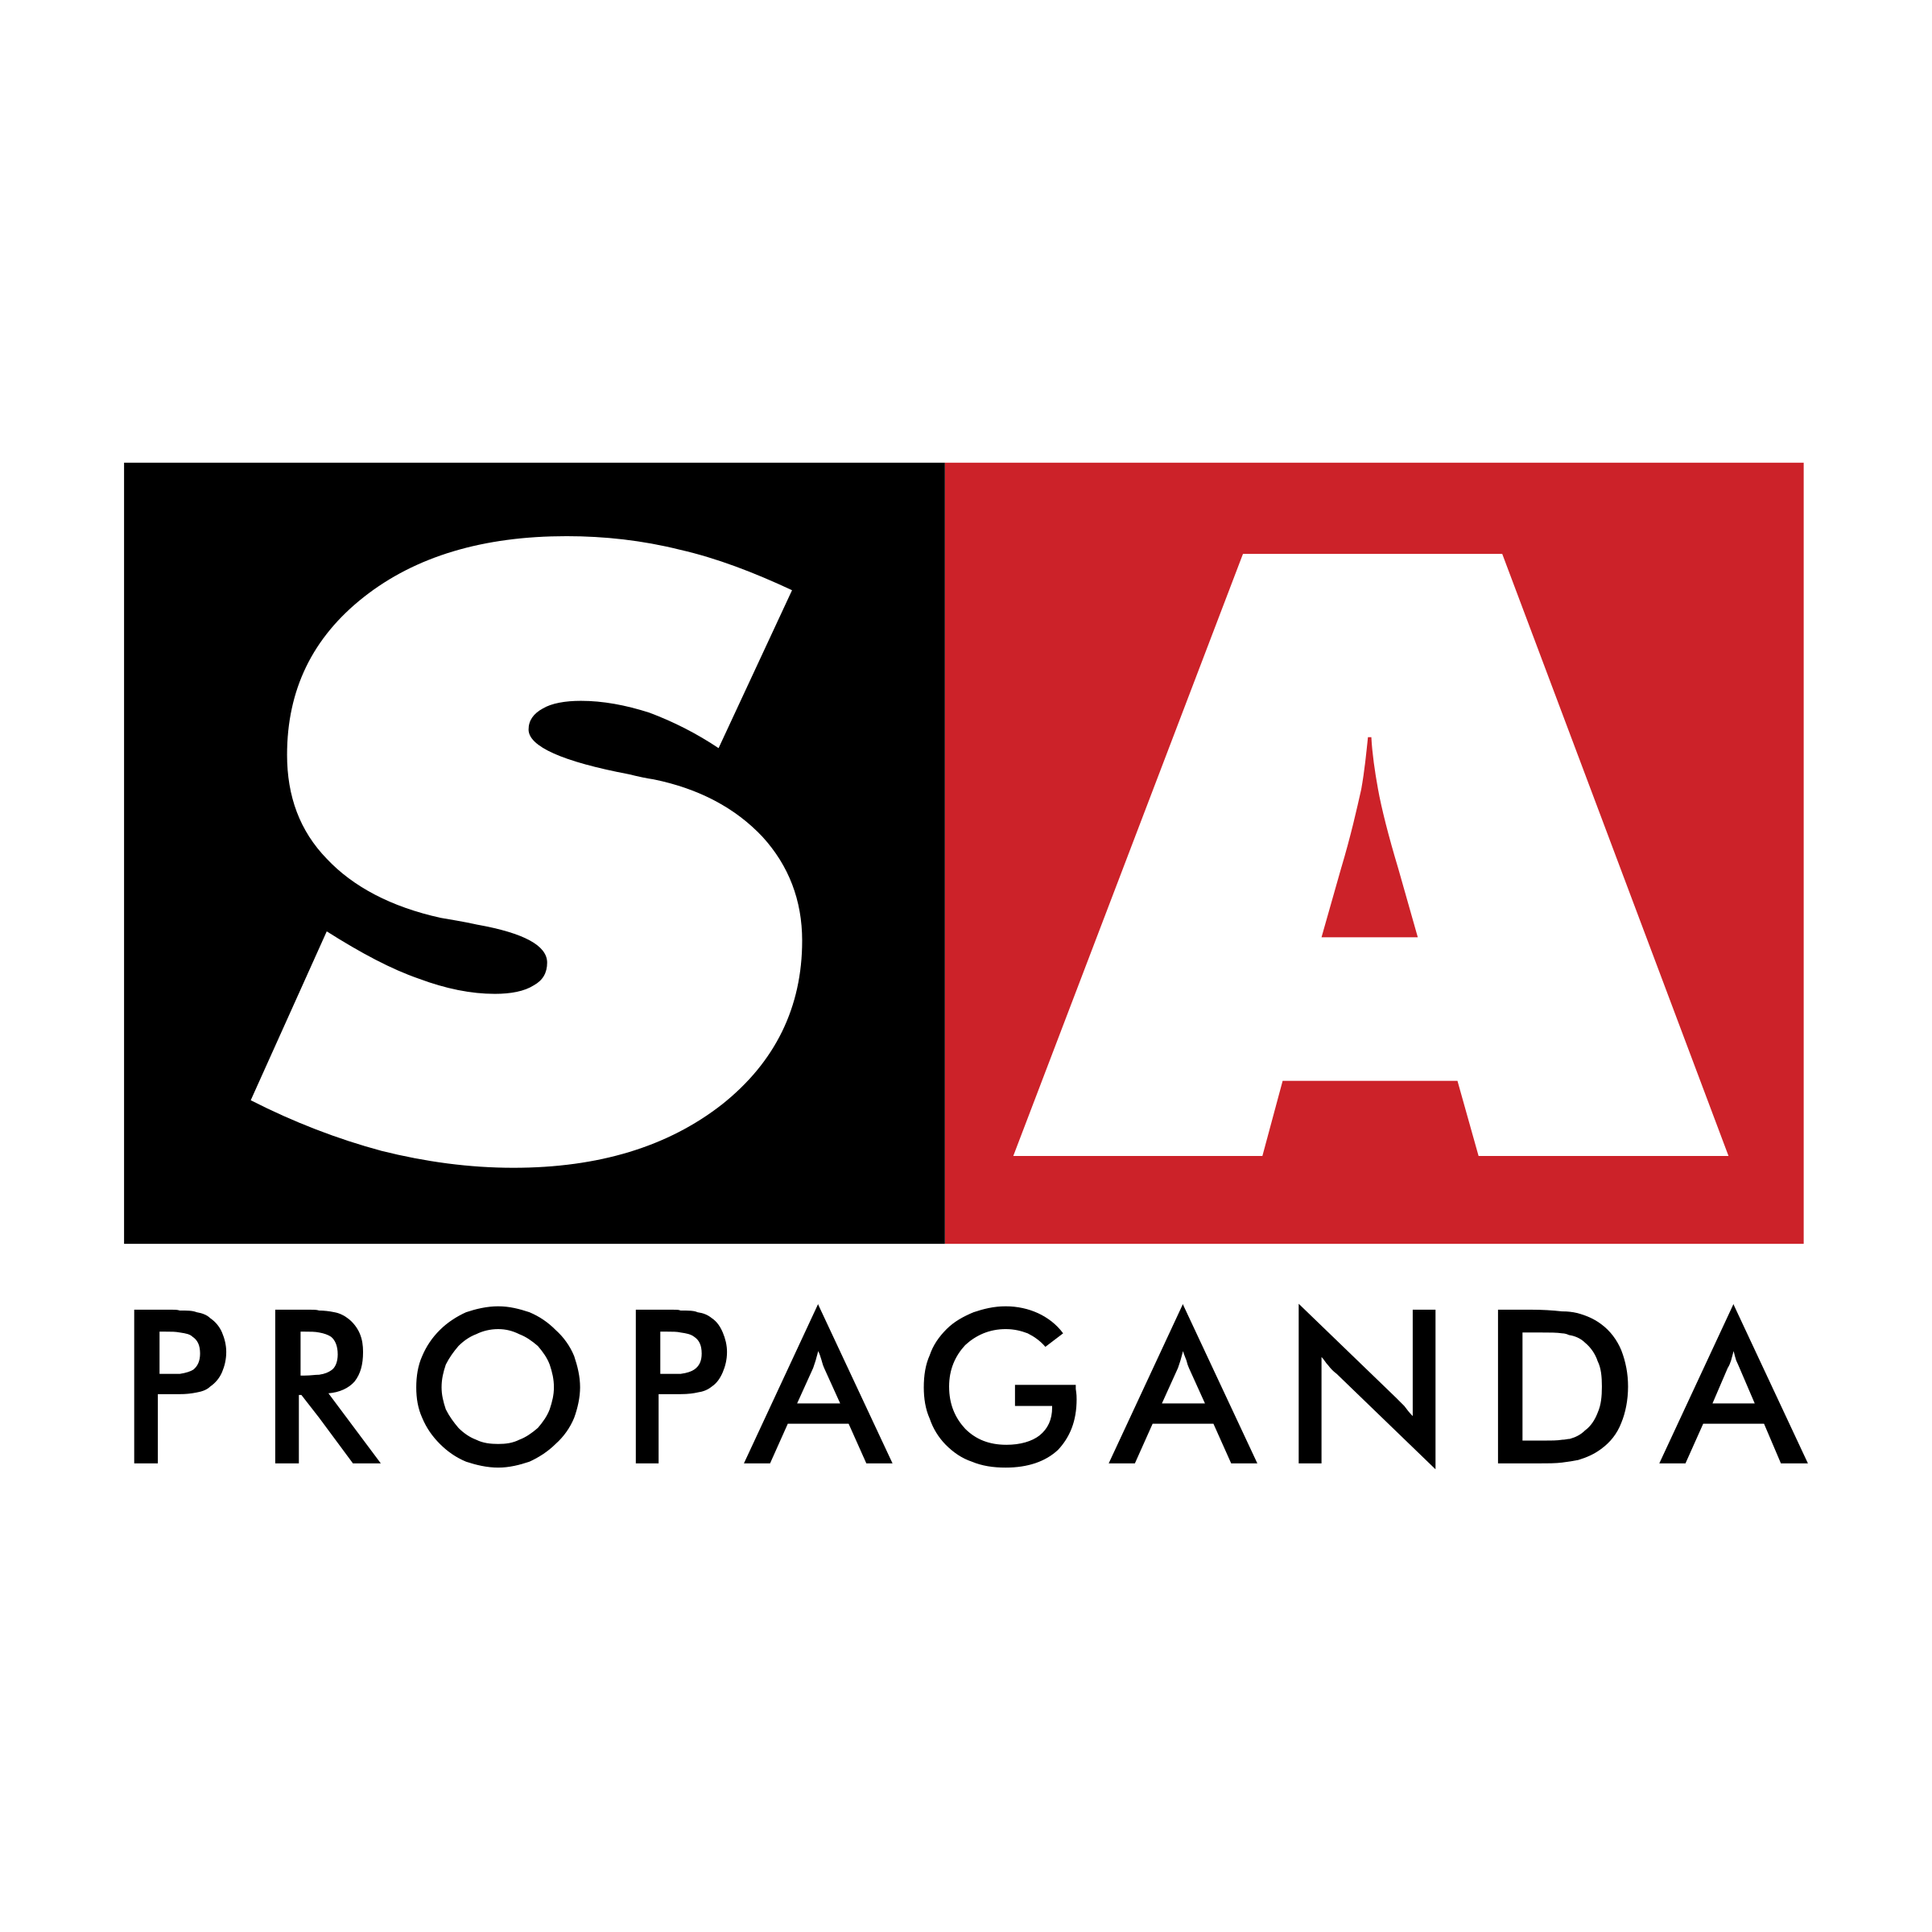 Propaganda Logo - SA Propaganda Logo PNG Transparent & SVG Vector